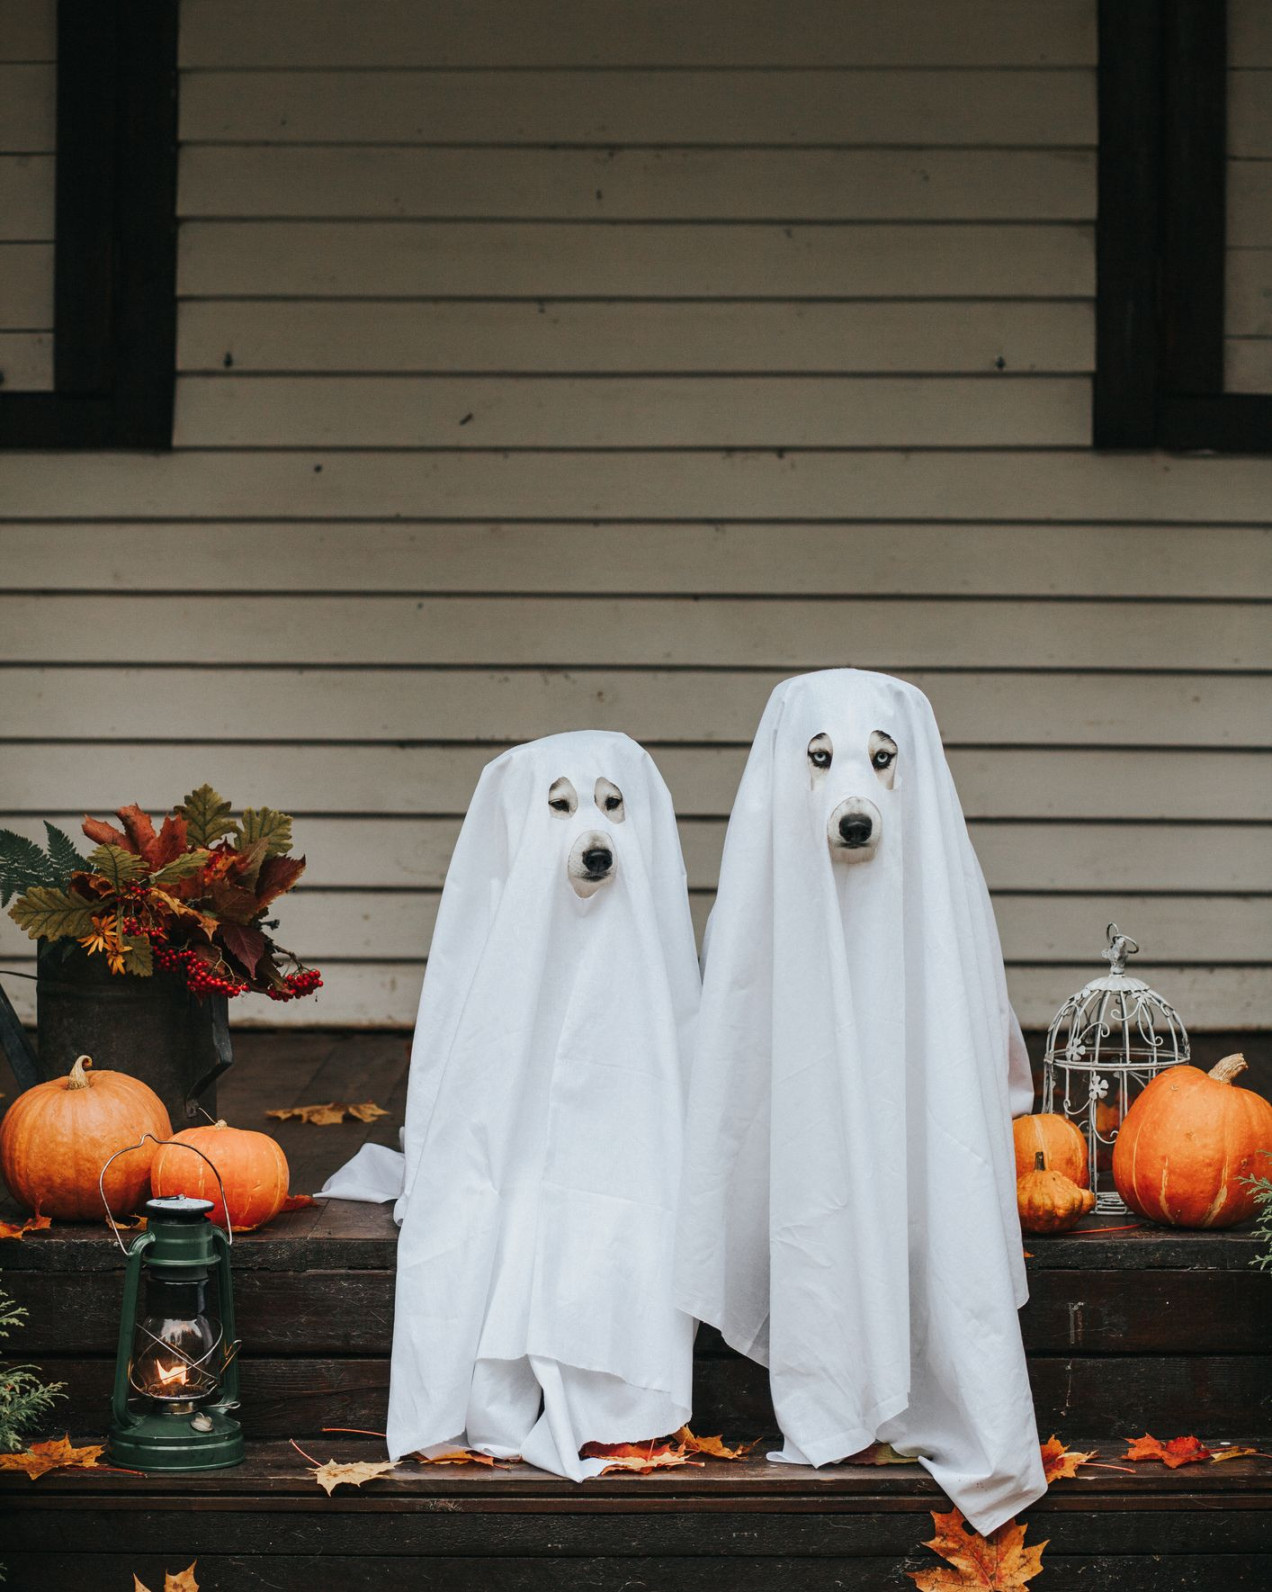 Best Outdoor Halloween Decorations to Try in